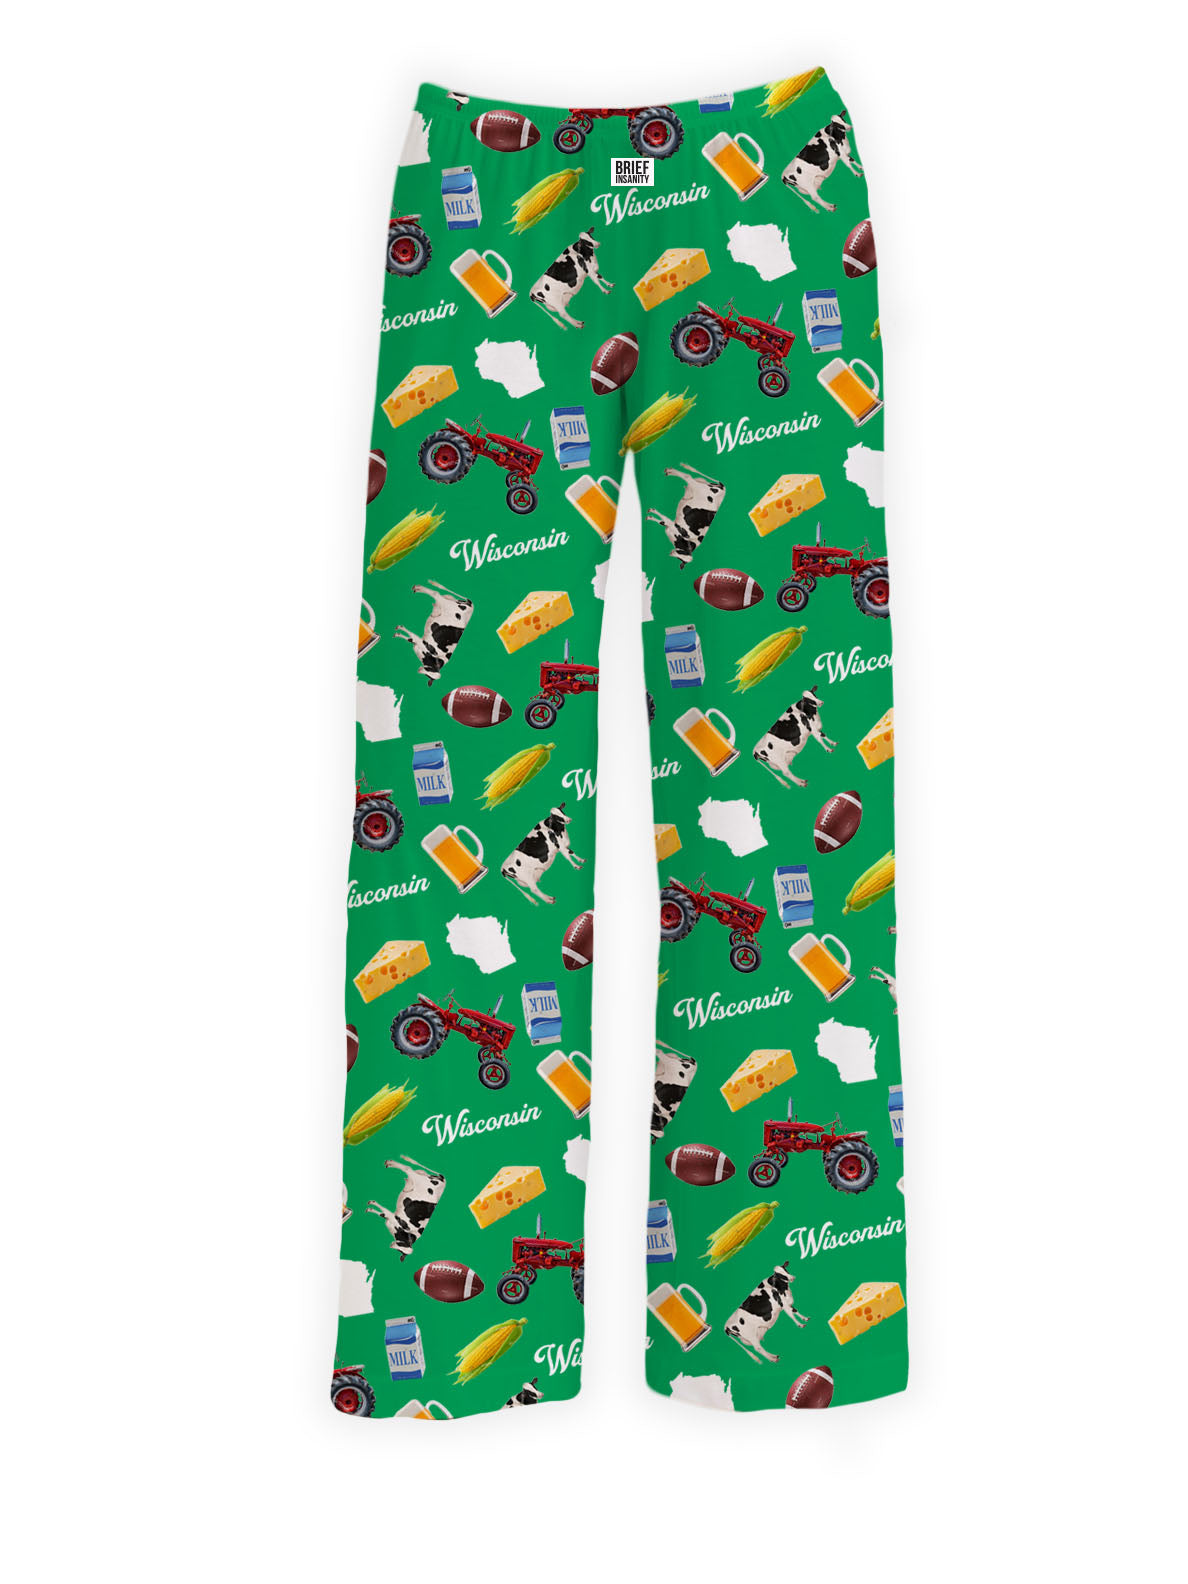 BRIEF INSANITY Wisconsin Green Pattern Pajama Lounge Pants